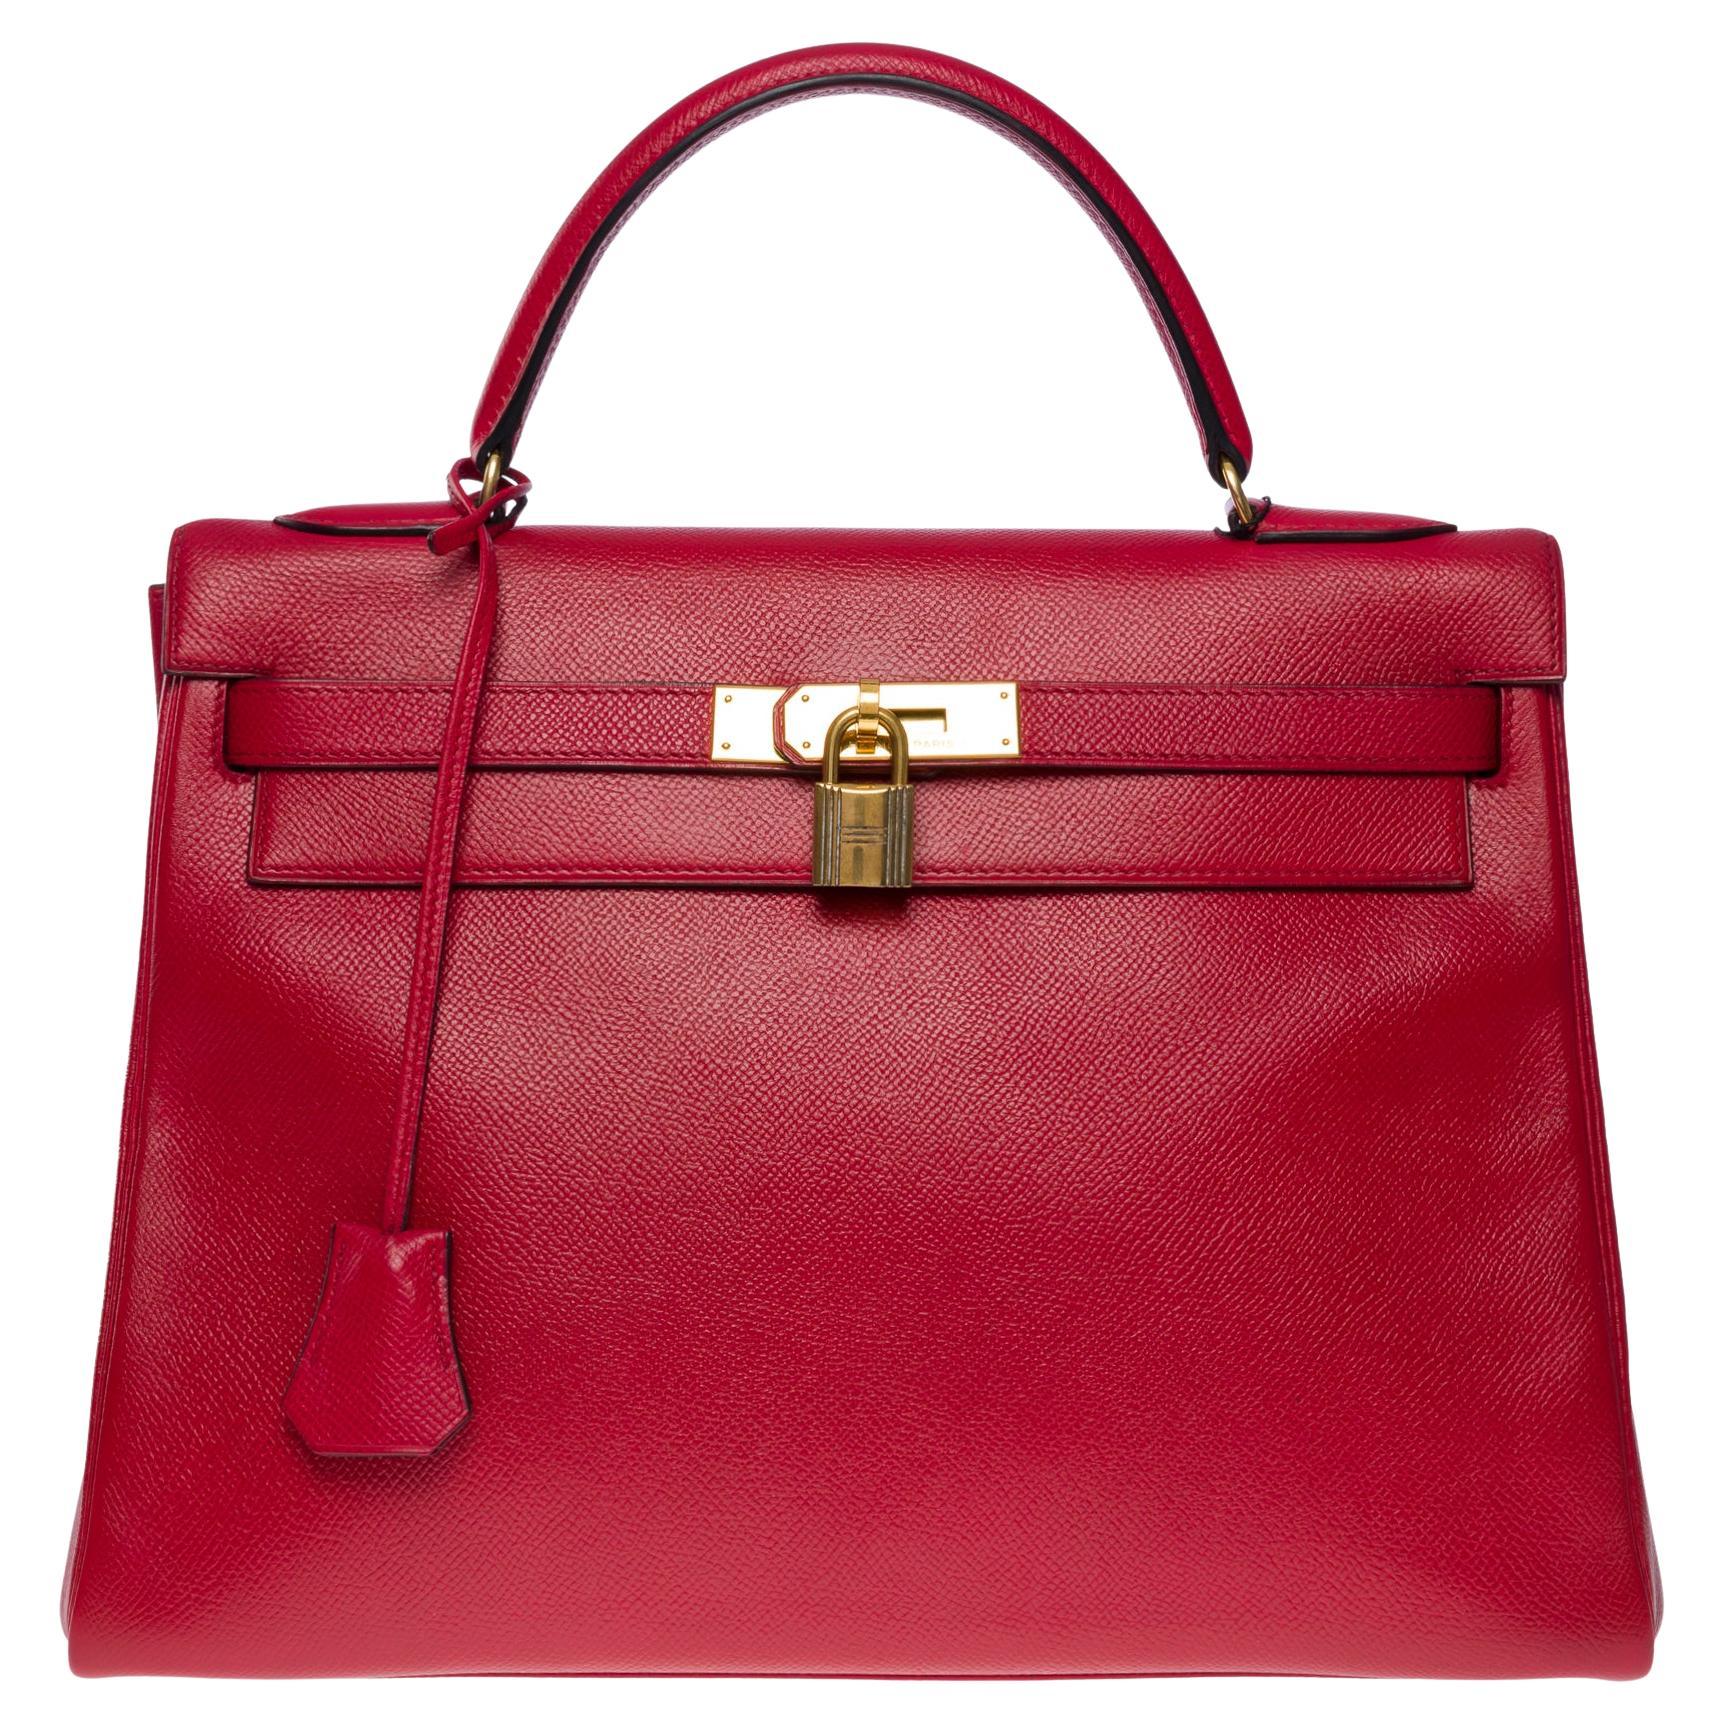 Hermès Kelly 32 retourne handbag strap in Red Courchevel leather, GHW